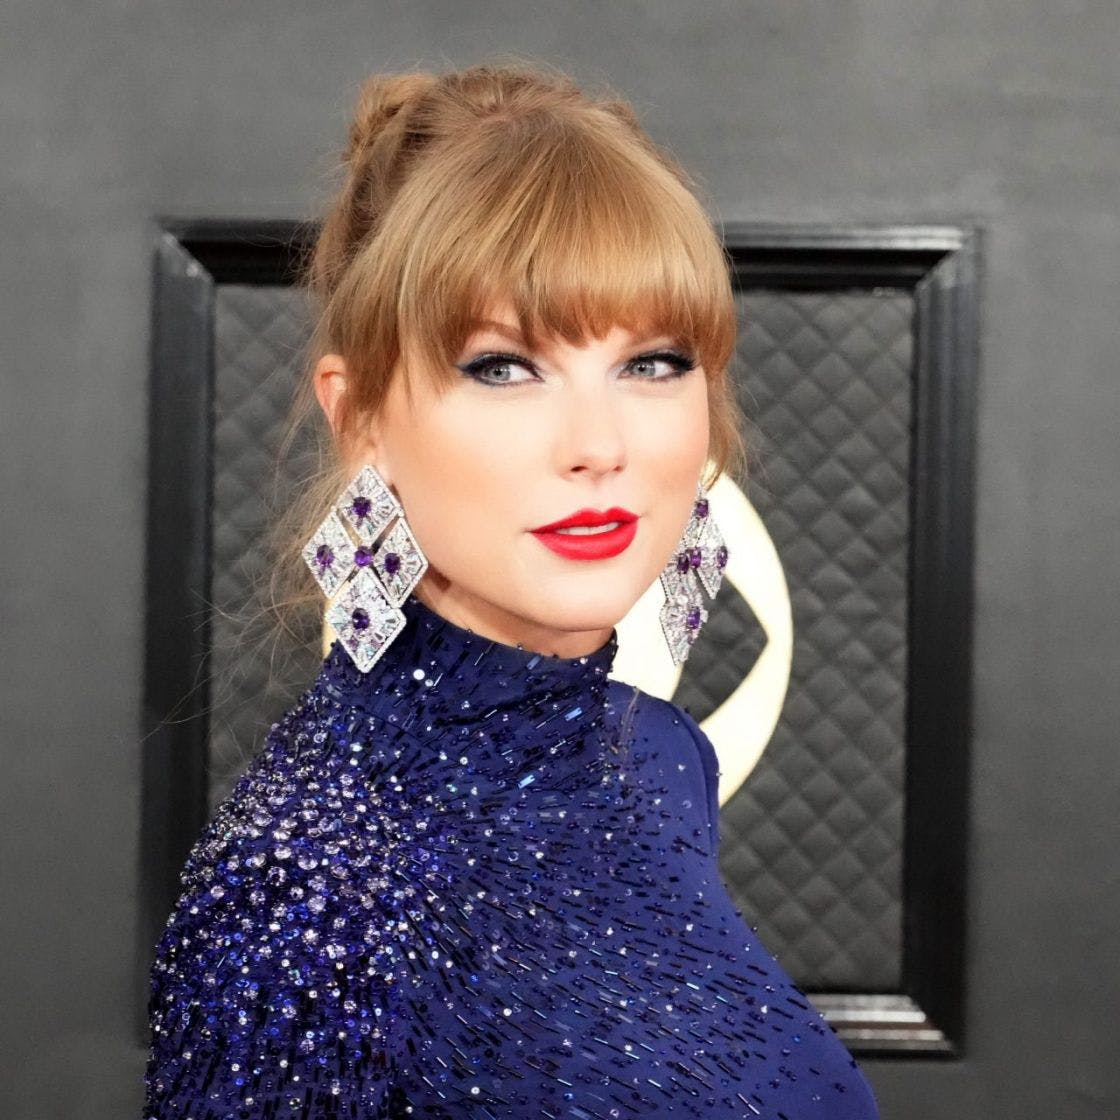 Taylor Swift Grammys 2023: she wears Midnights themed dress